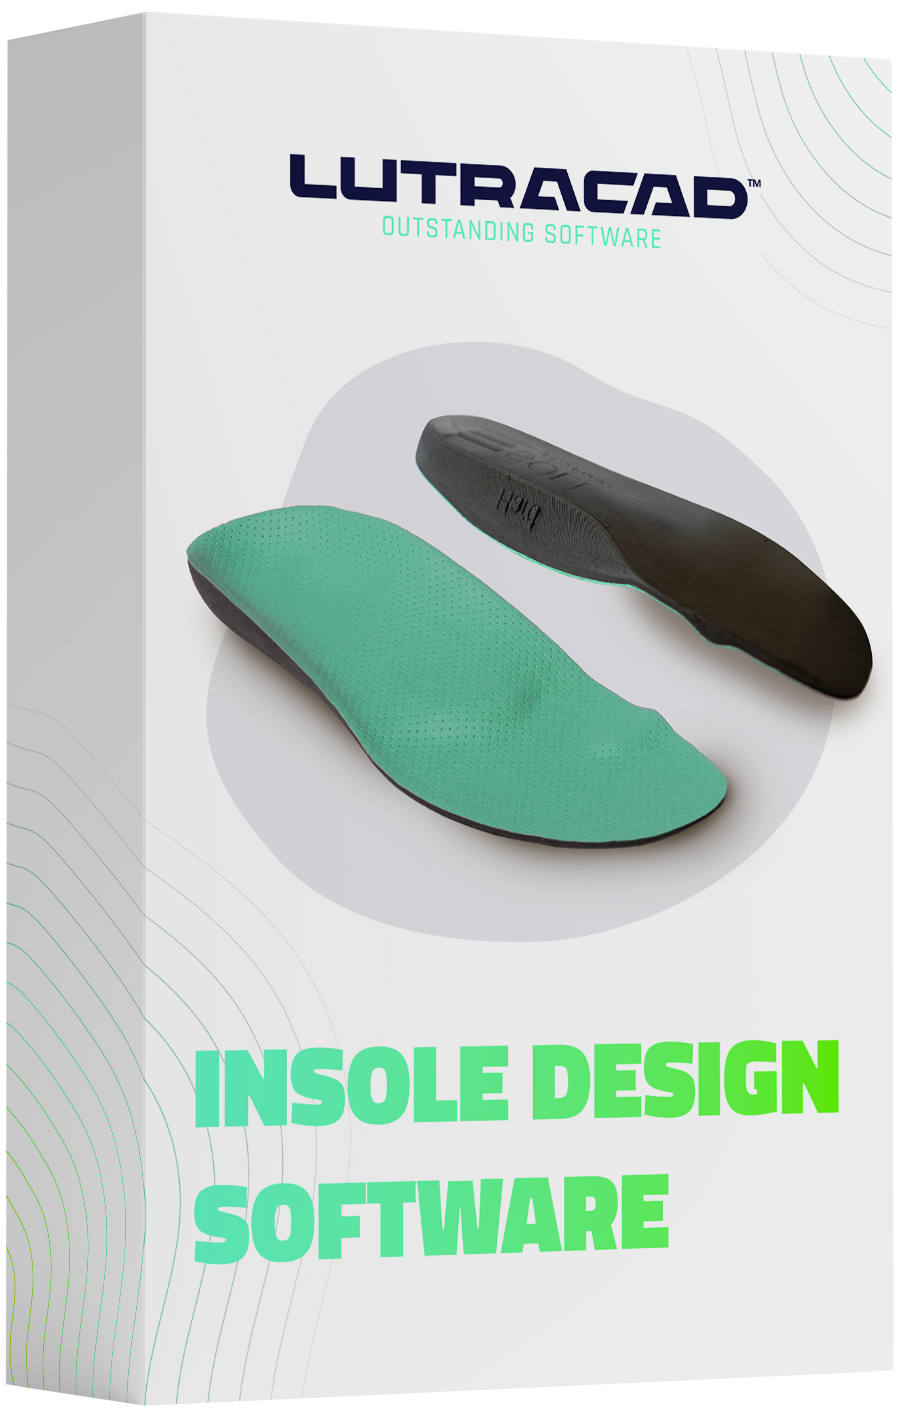 Insole design software